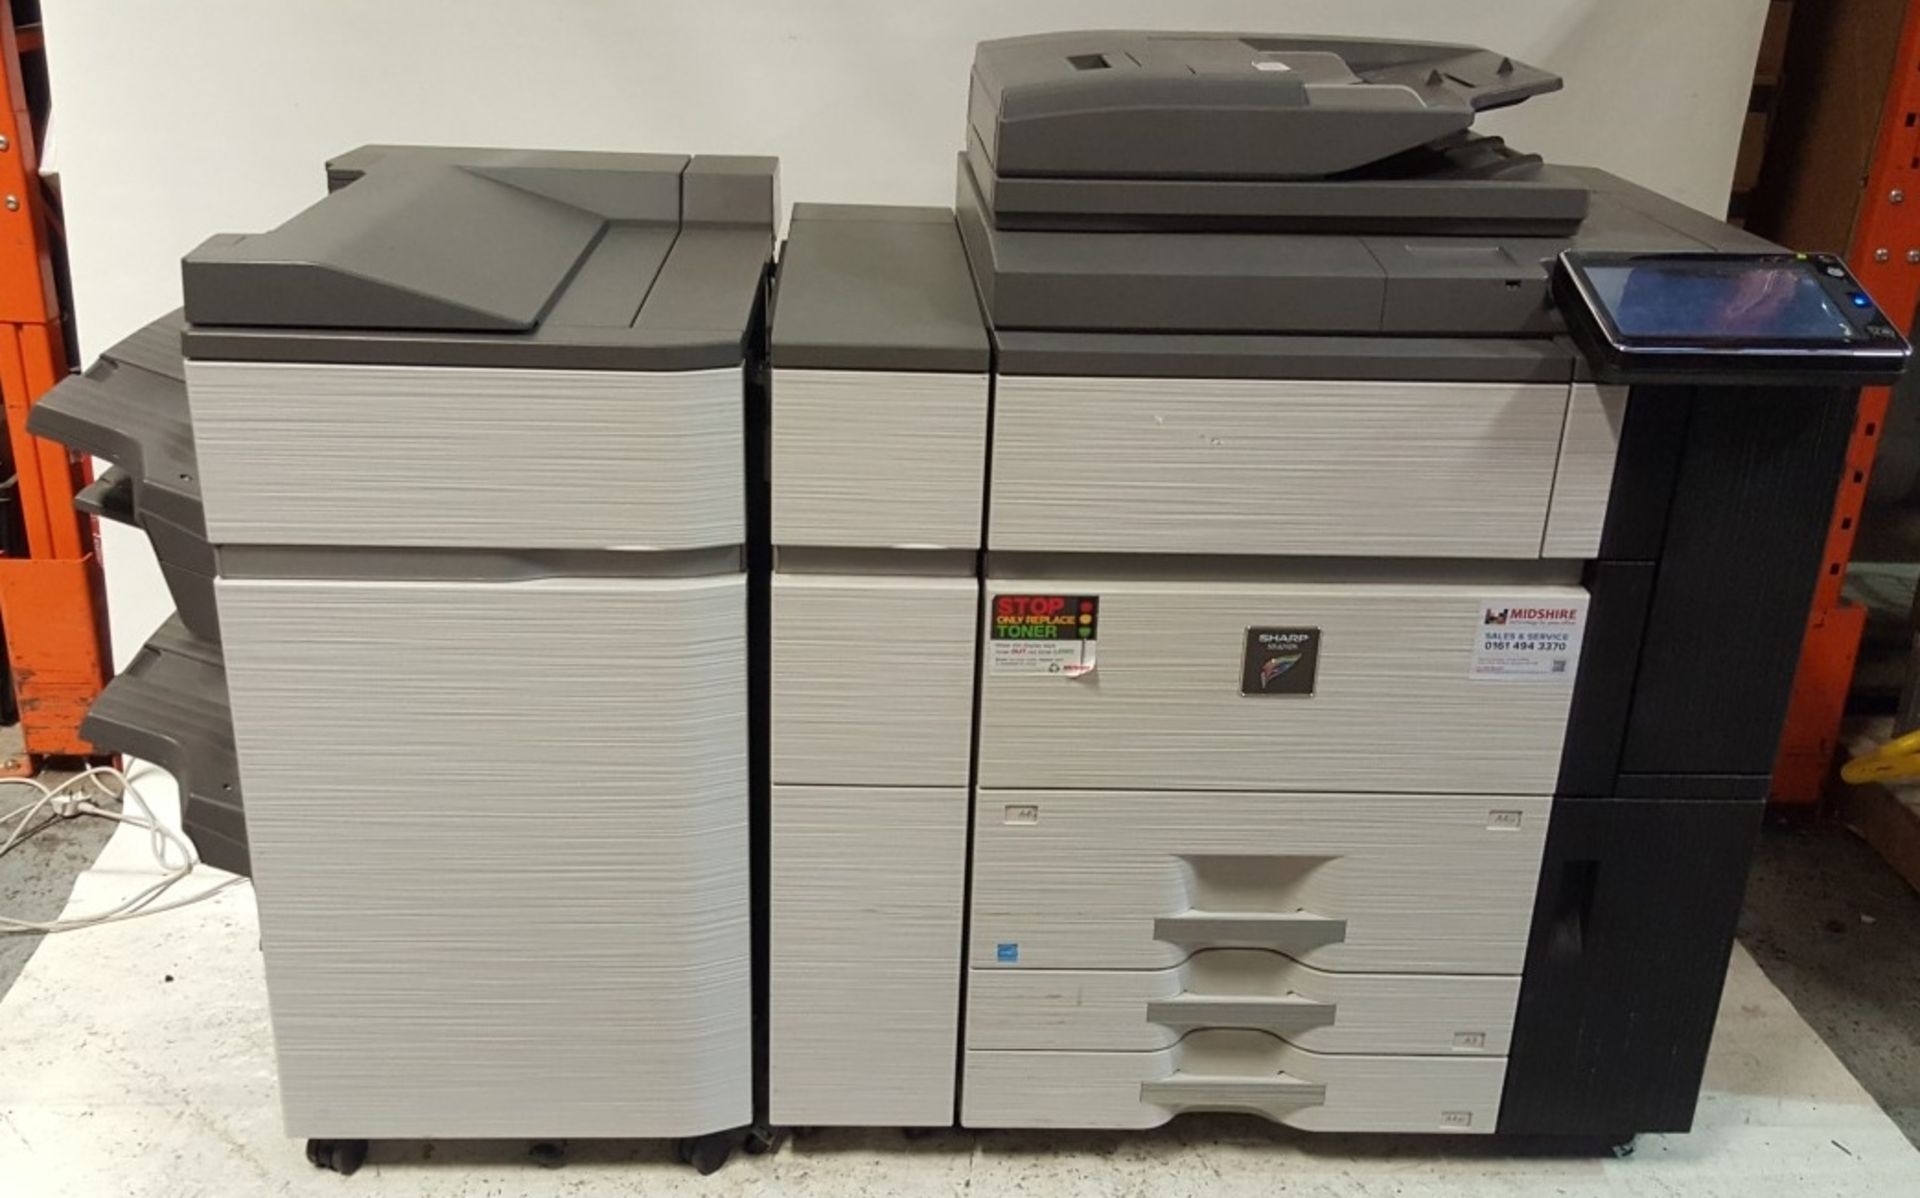 1 x Sharp MX6240N Office Photocopier Printer With Saddle Stitch Finisher & Curl Correction Unit -